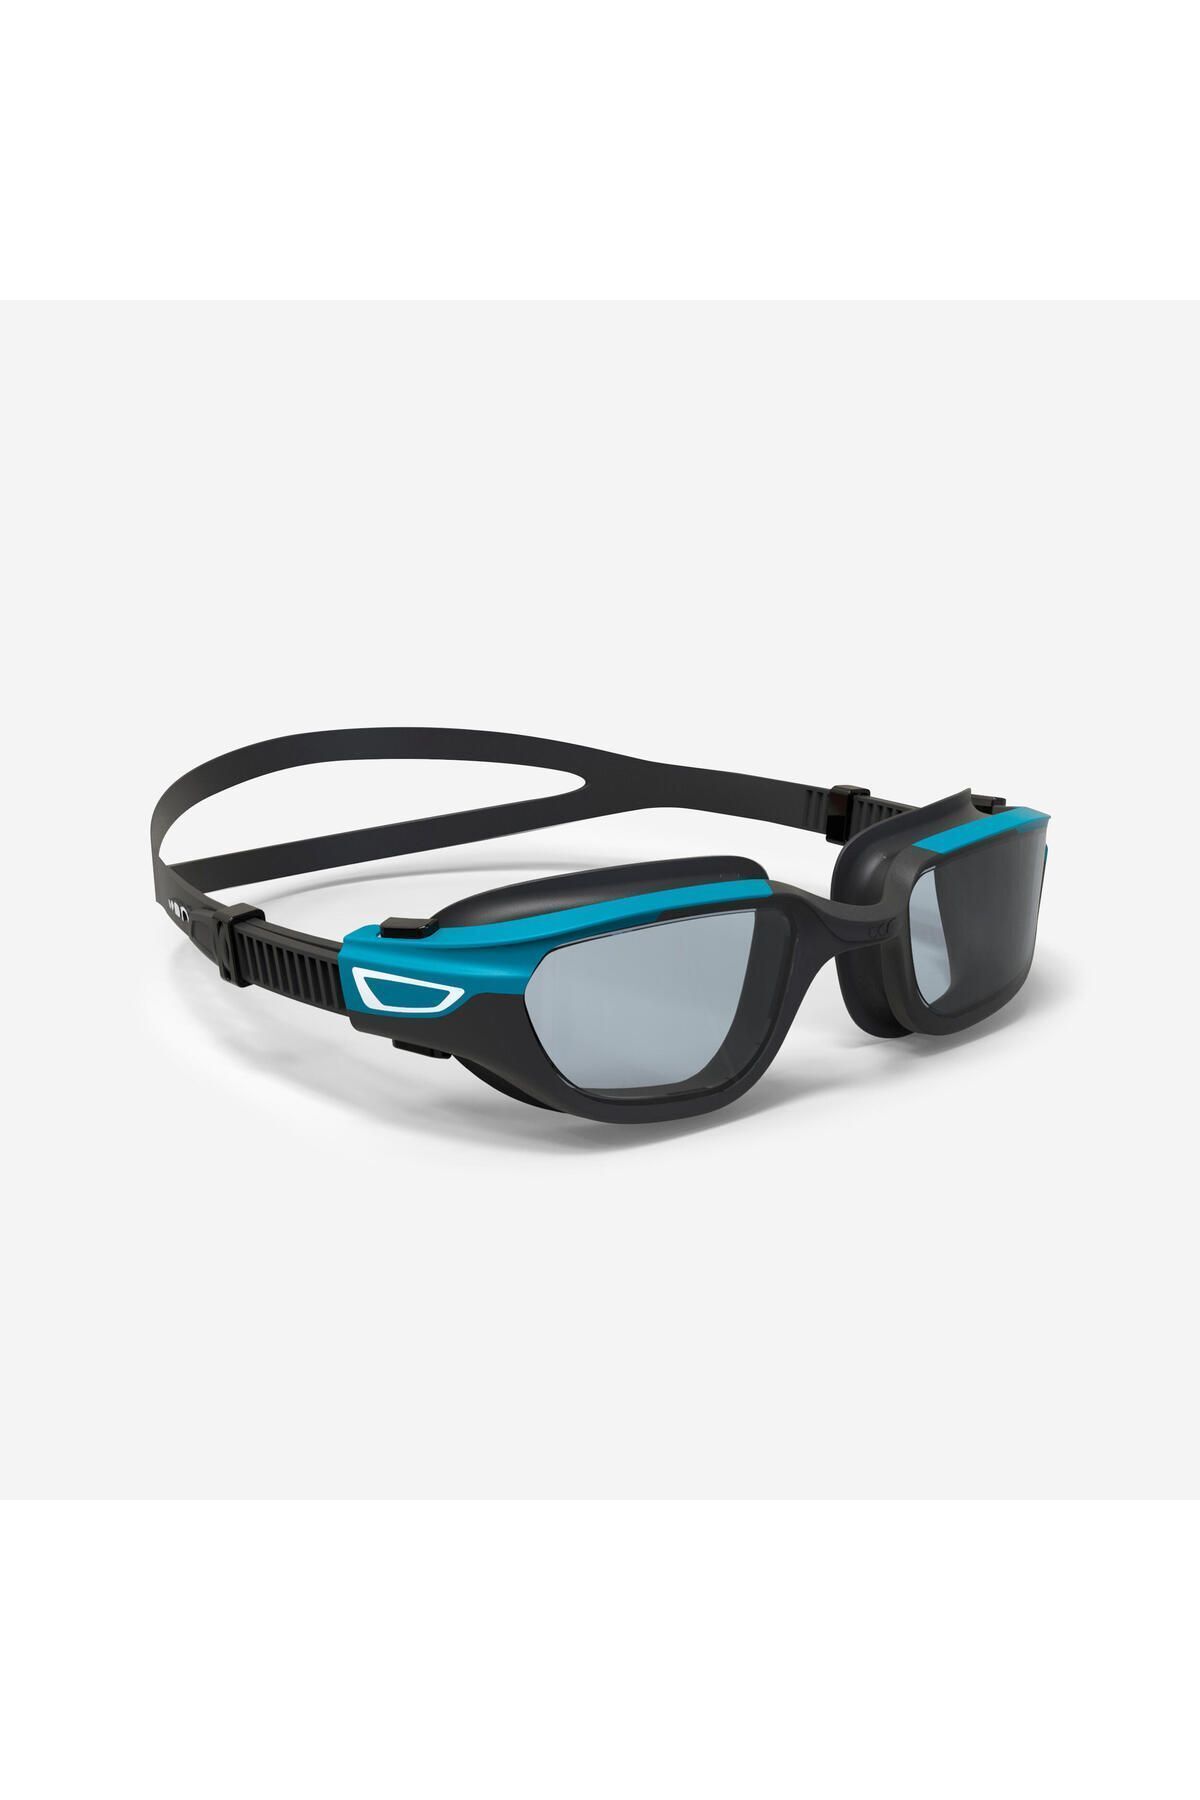 Decathlon Yüzücü Gözlüğü - Siyah / Mavi - Polarize Camlar - L Boy - Spirit